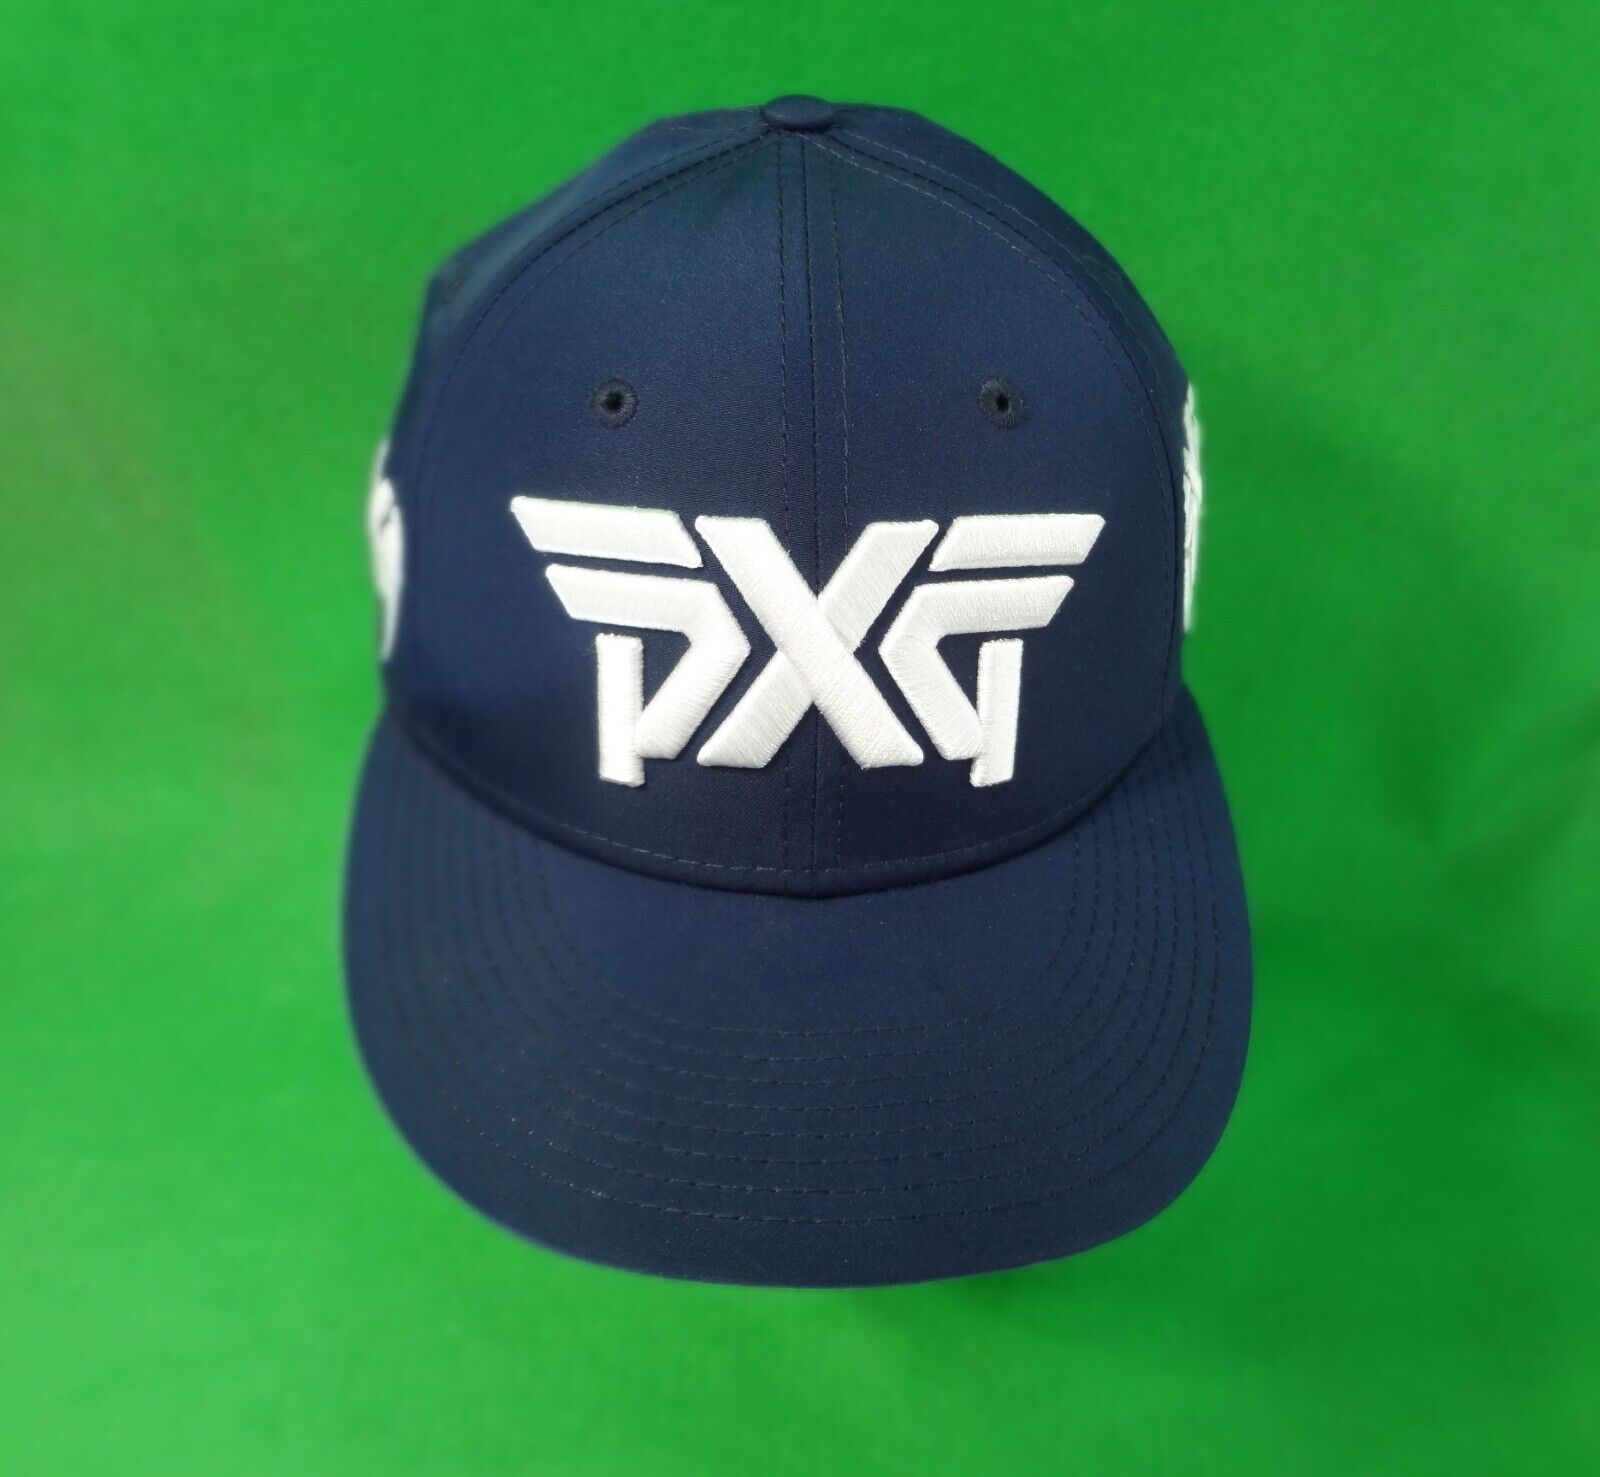 New PXG New Era blue w/ white embroidery golf hat OSFA | eBay